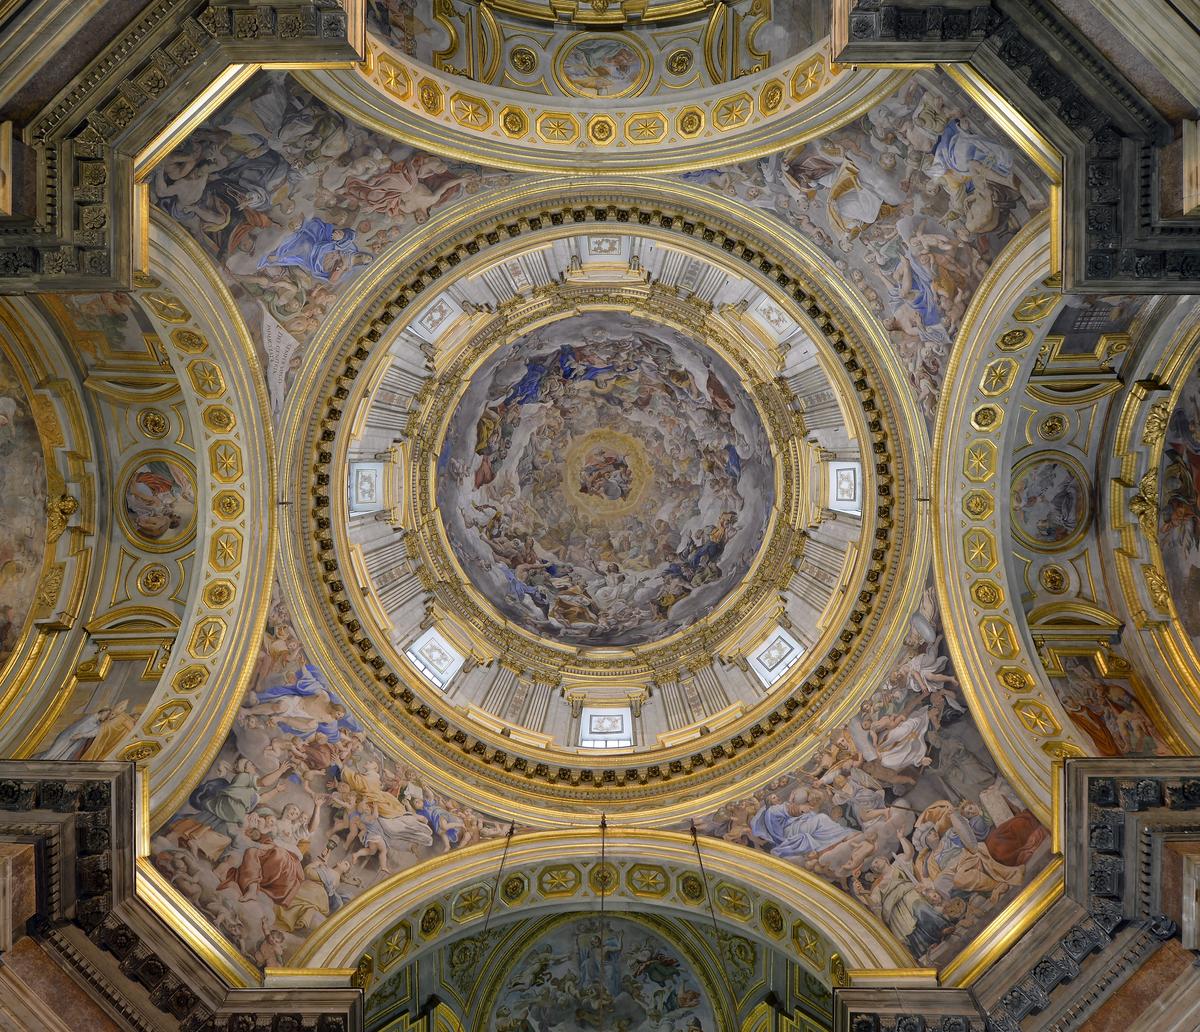 Frescoes by Domenichino adorn the Royal Chapel of the Treasure of San Gennaro. (LivioAndronico/CC BY-SA 4.0)